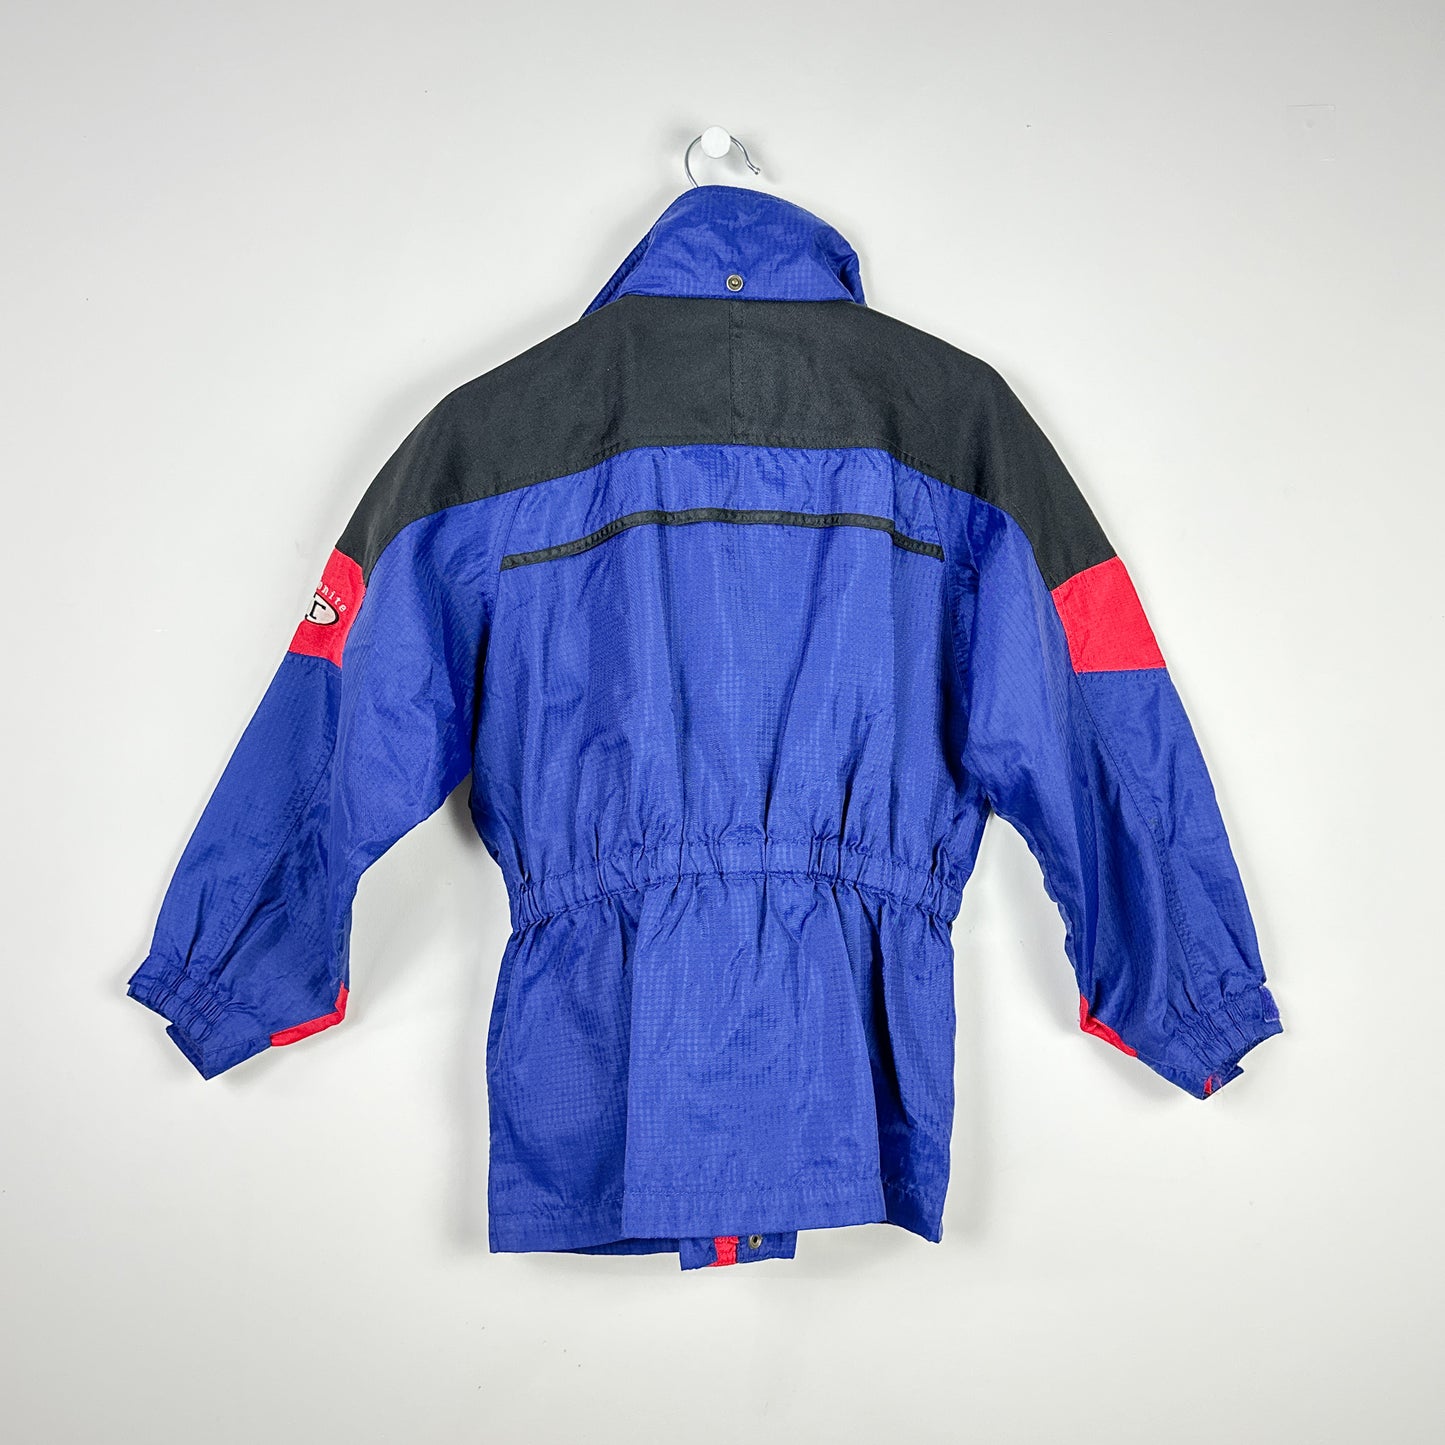 Vintage 90's Kids Columbia Ski Jacket - Size 10-12yr